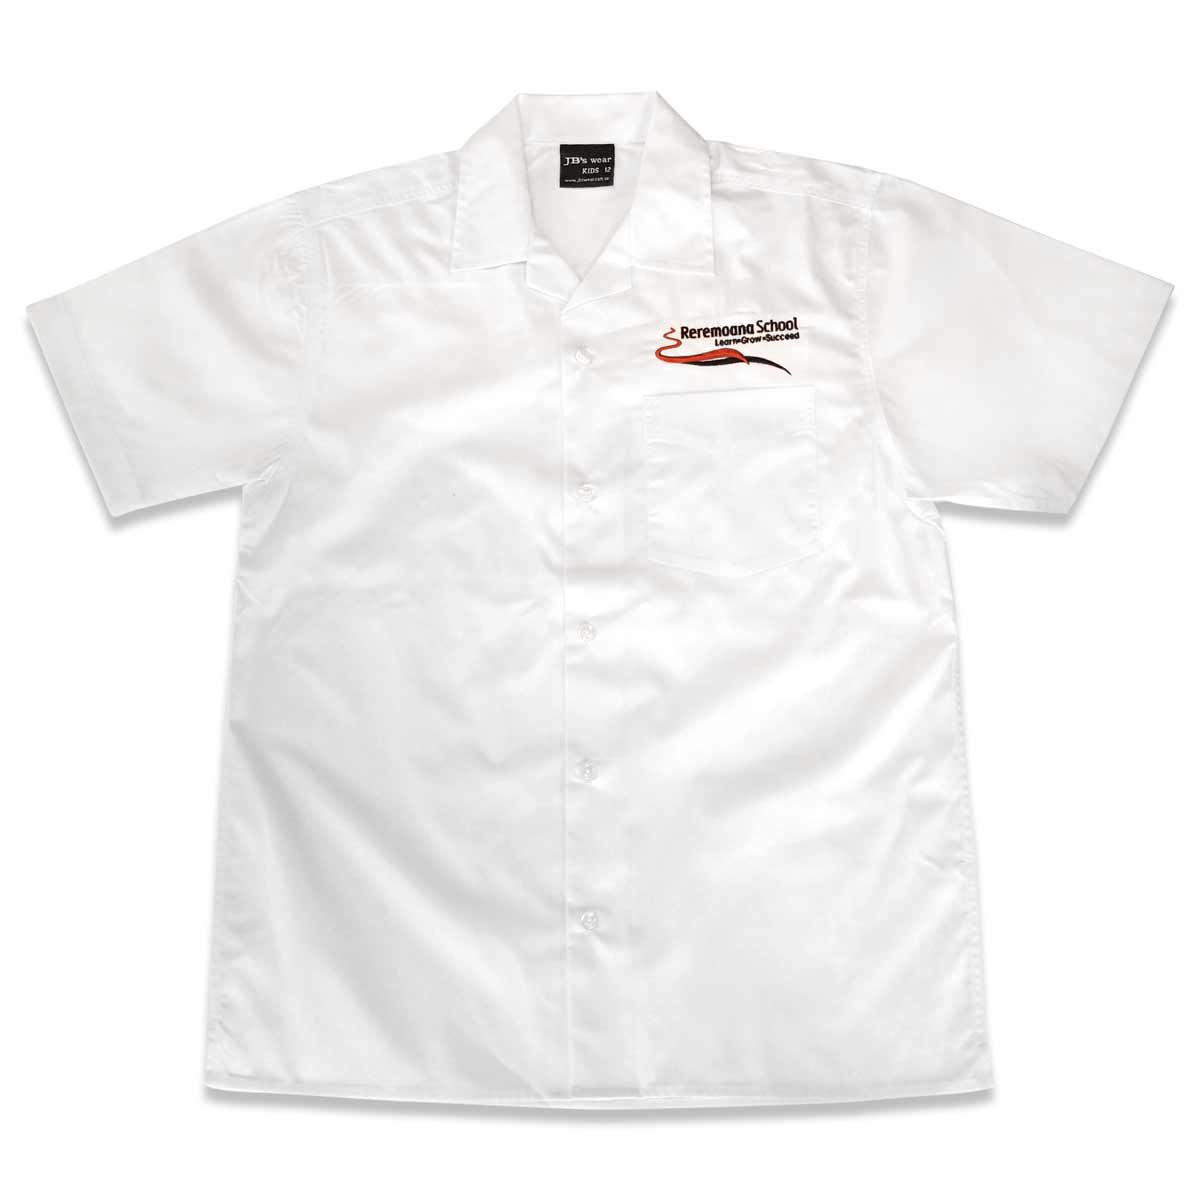 White Boys Shirt Short Sleeved image